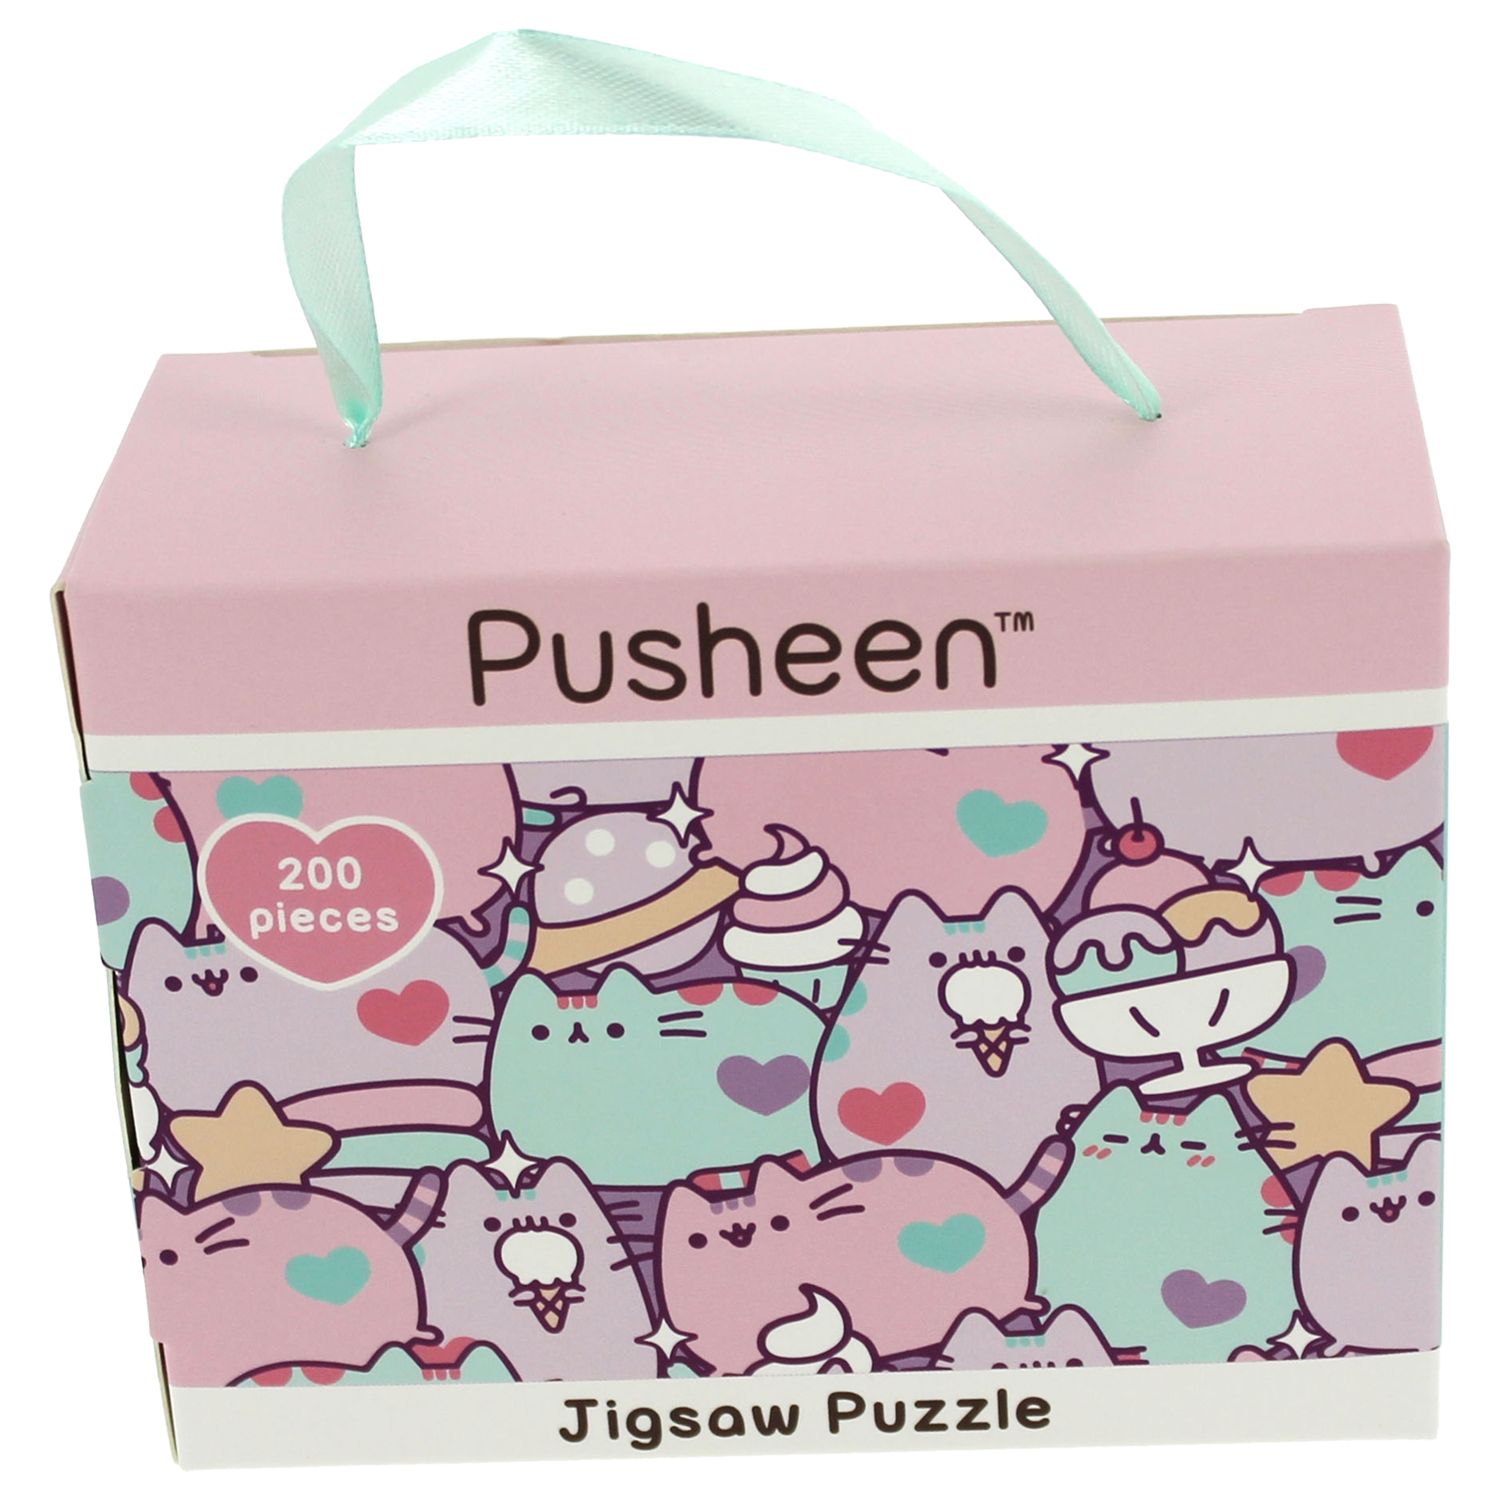 Pusheen Jigsaw Puzzle, 200 Pieces